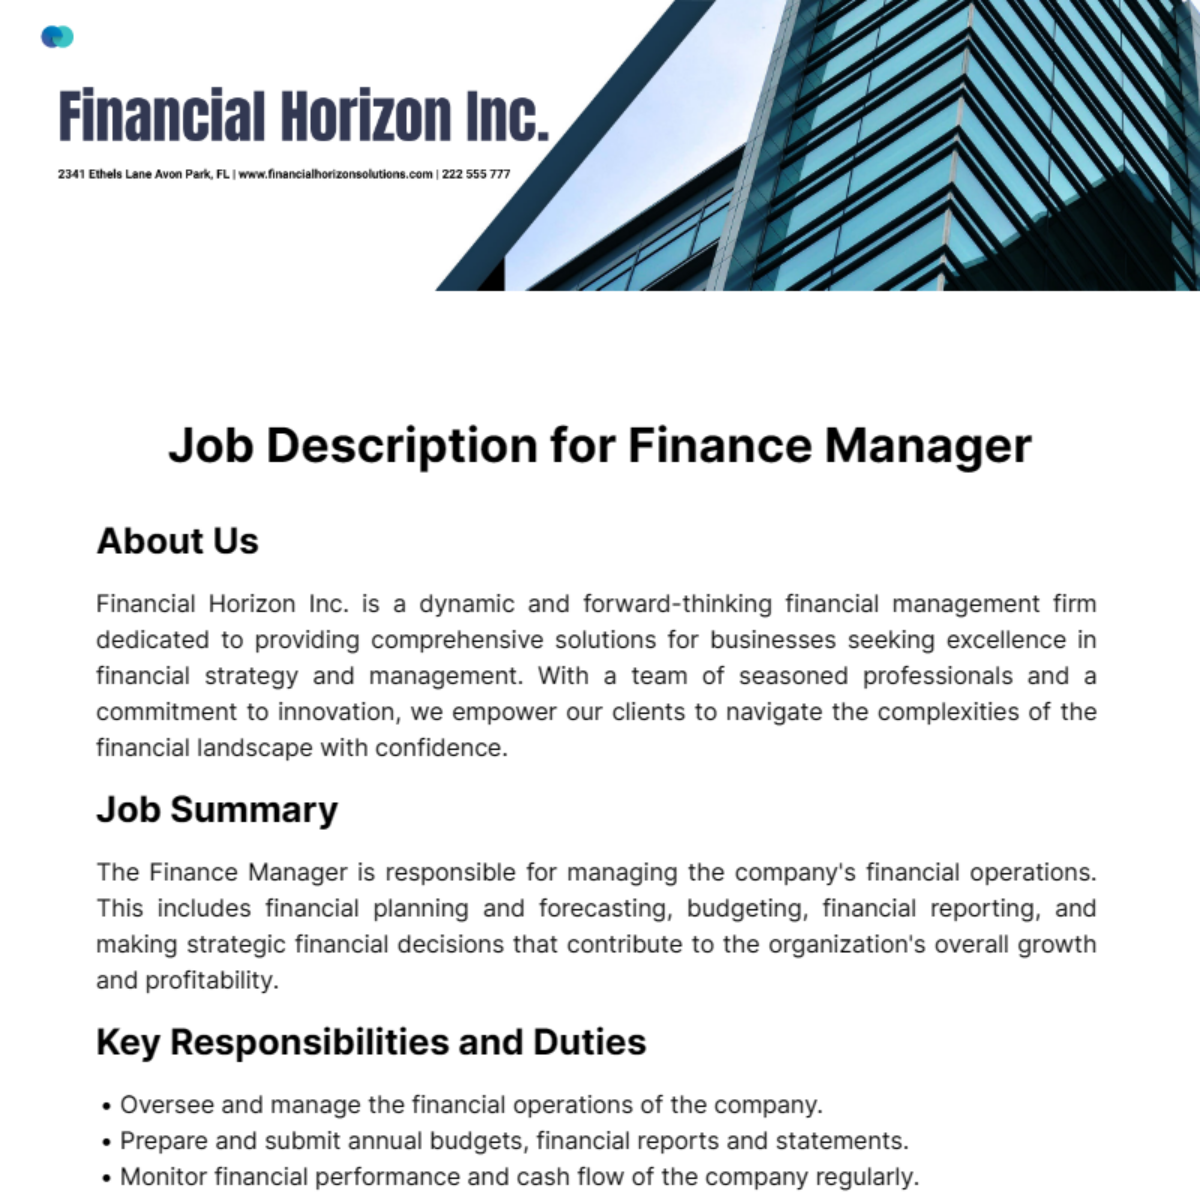 Job Description for Finance Manager Template